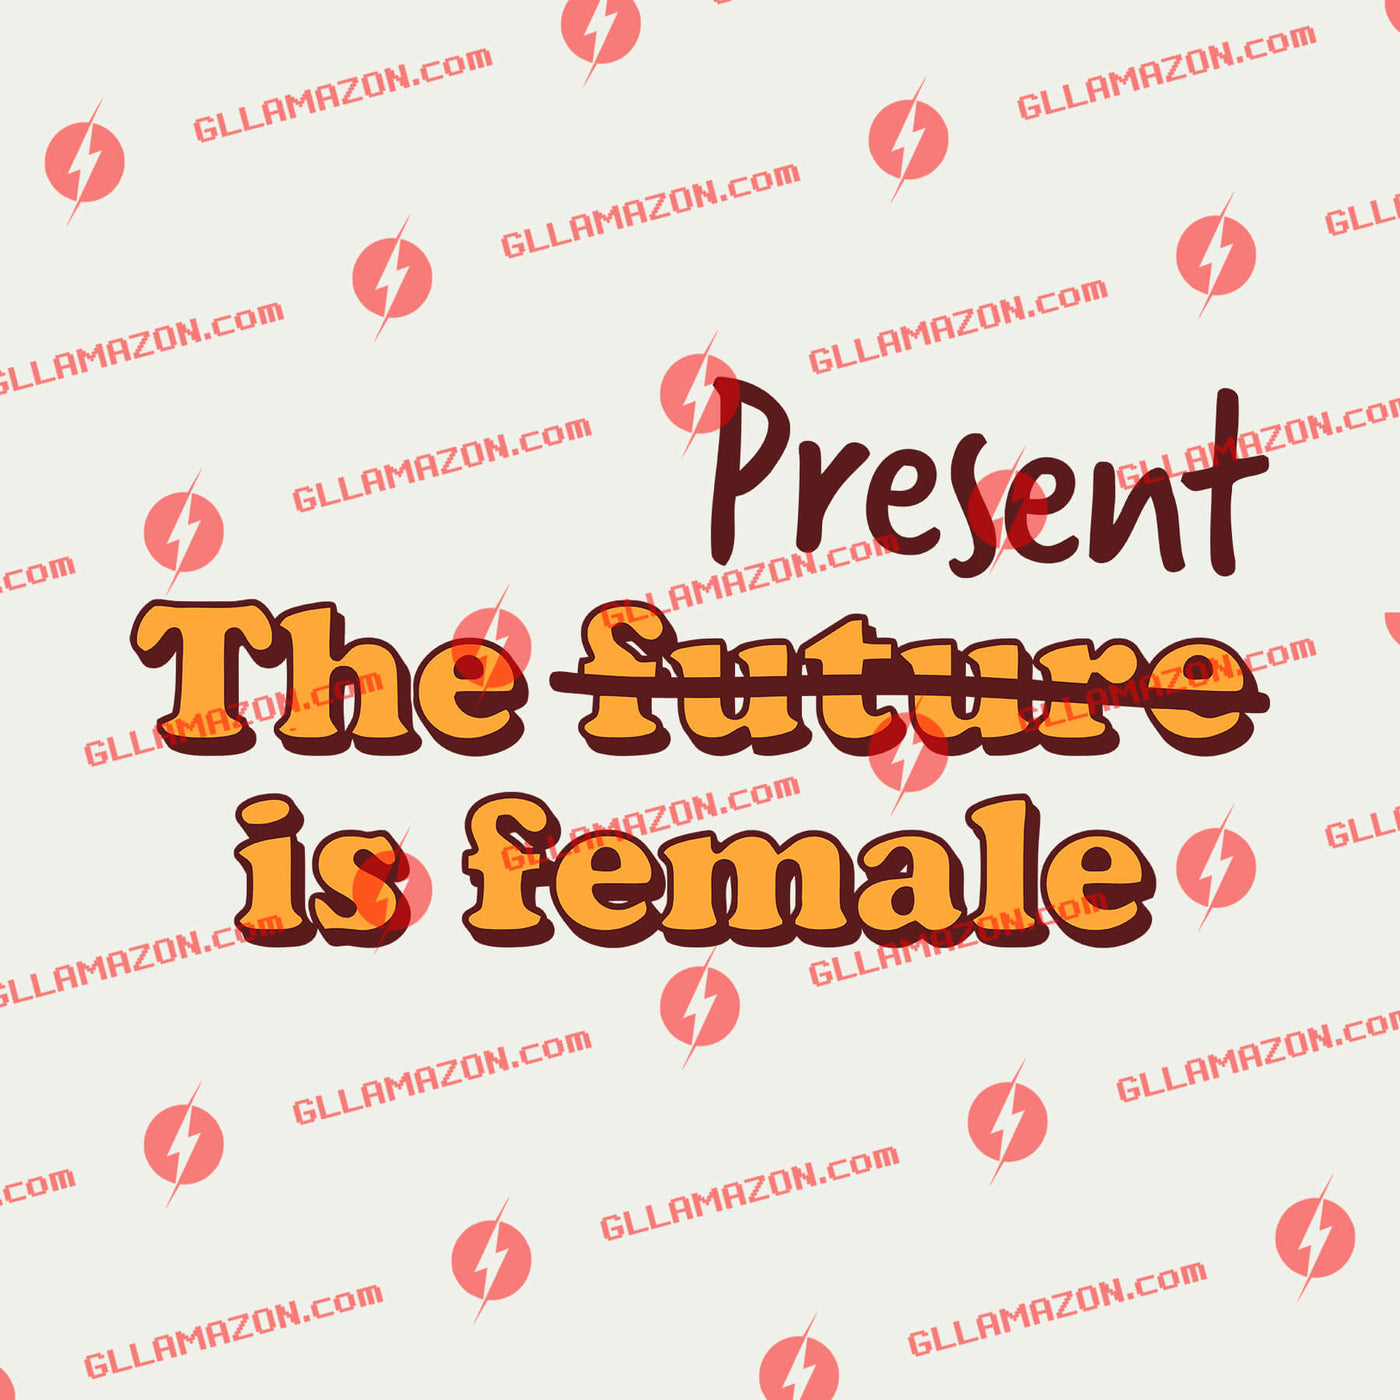 The Present Is Female Premium Tee